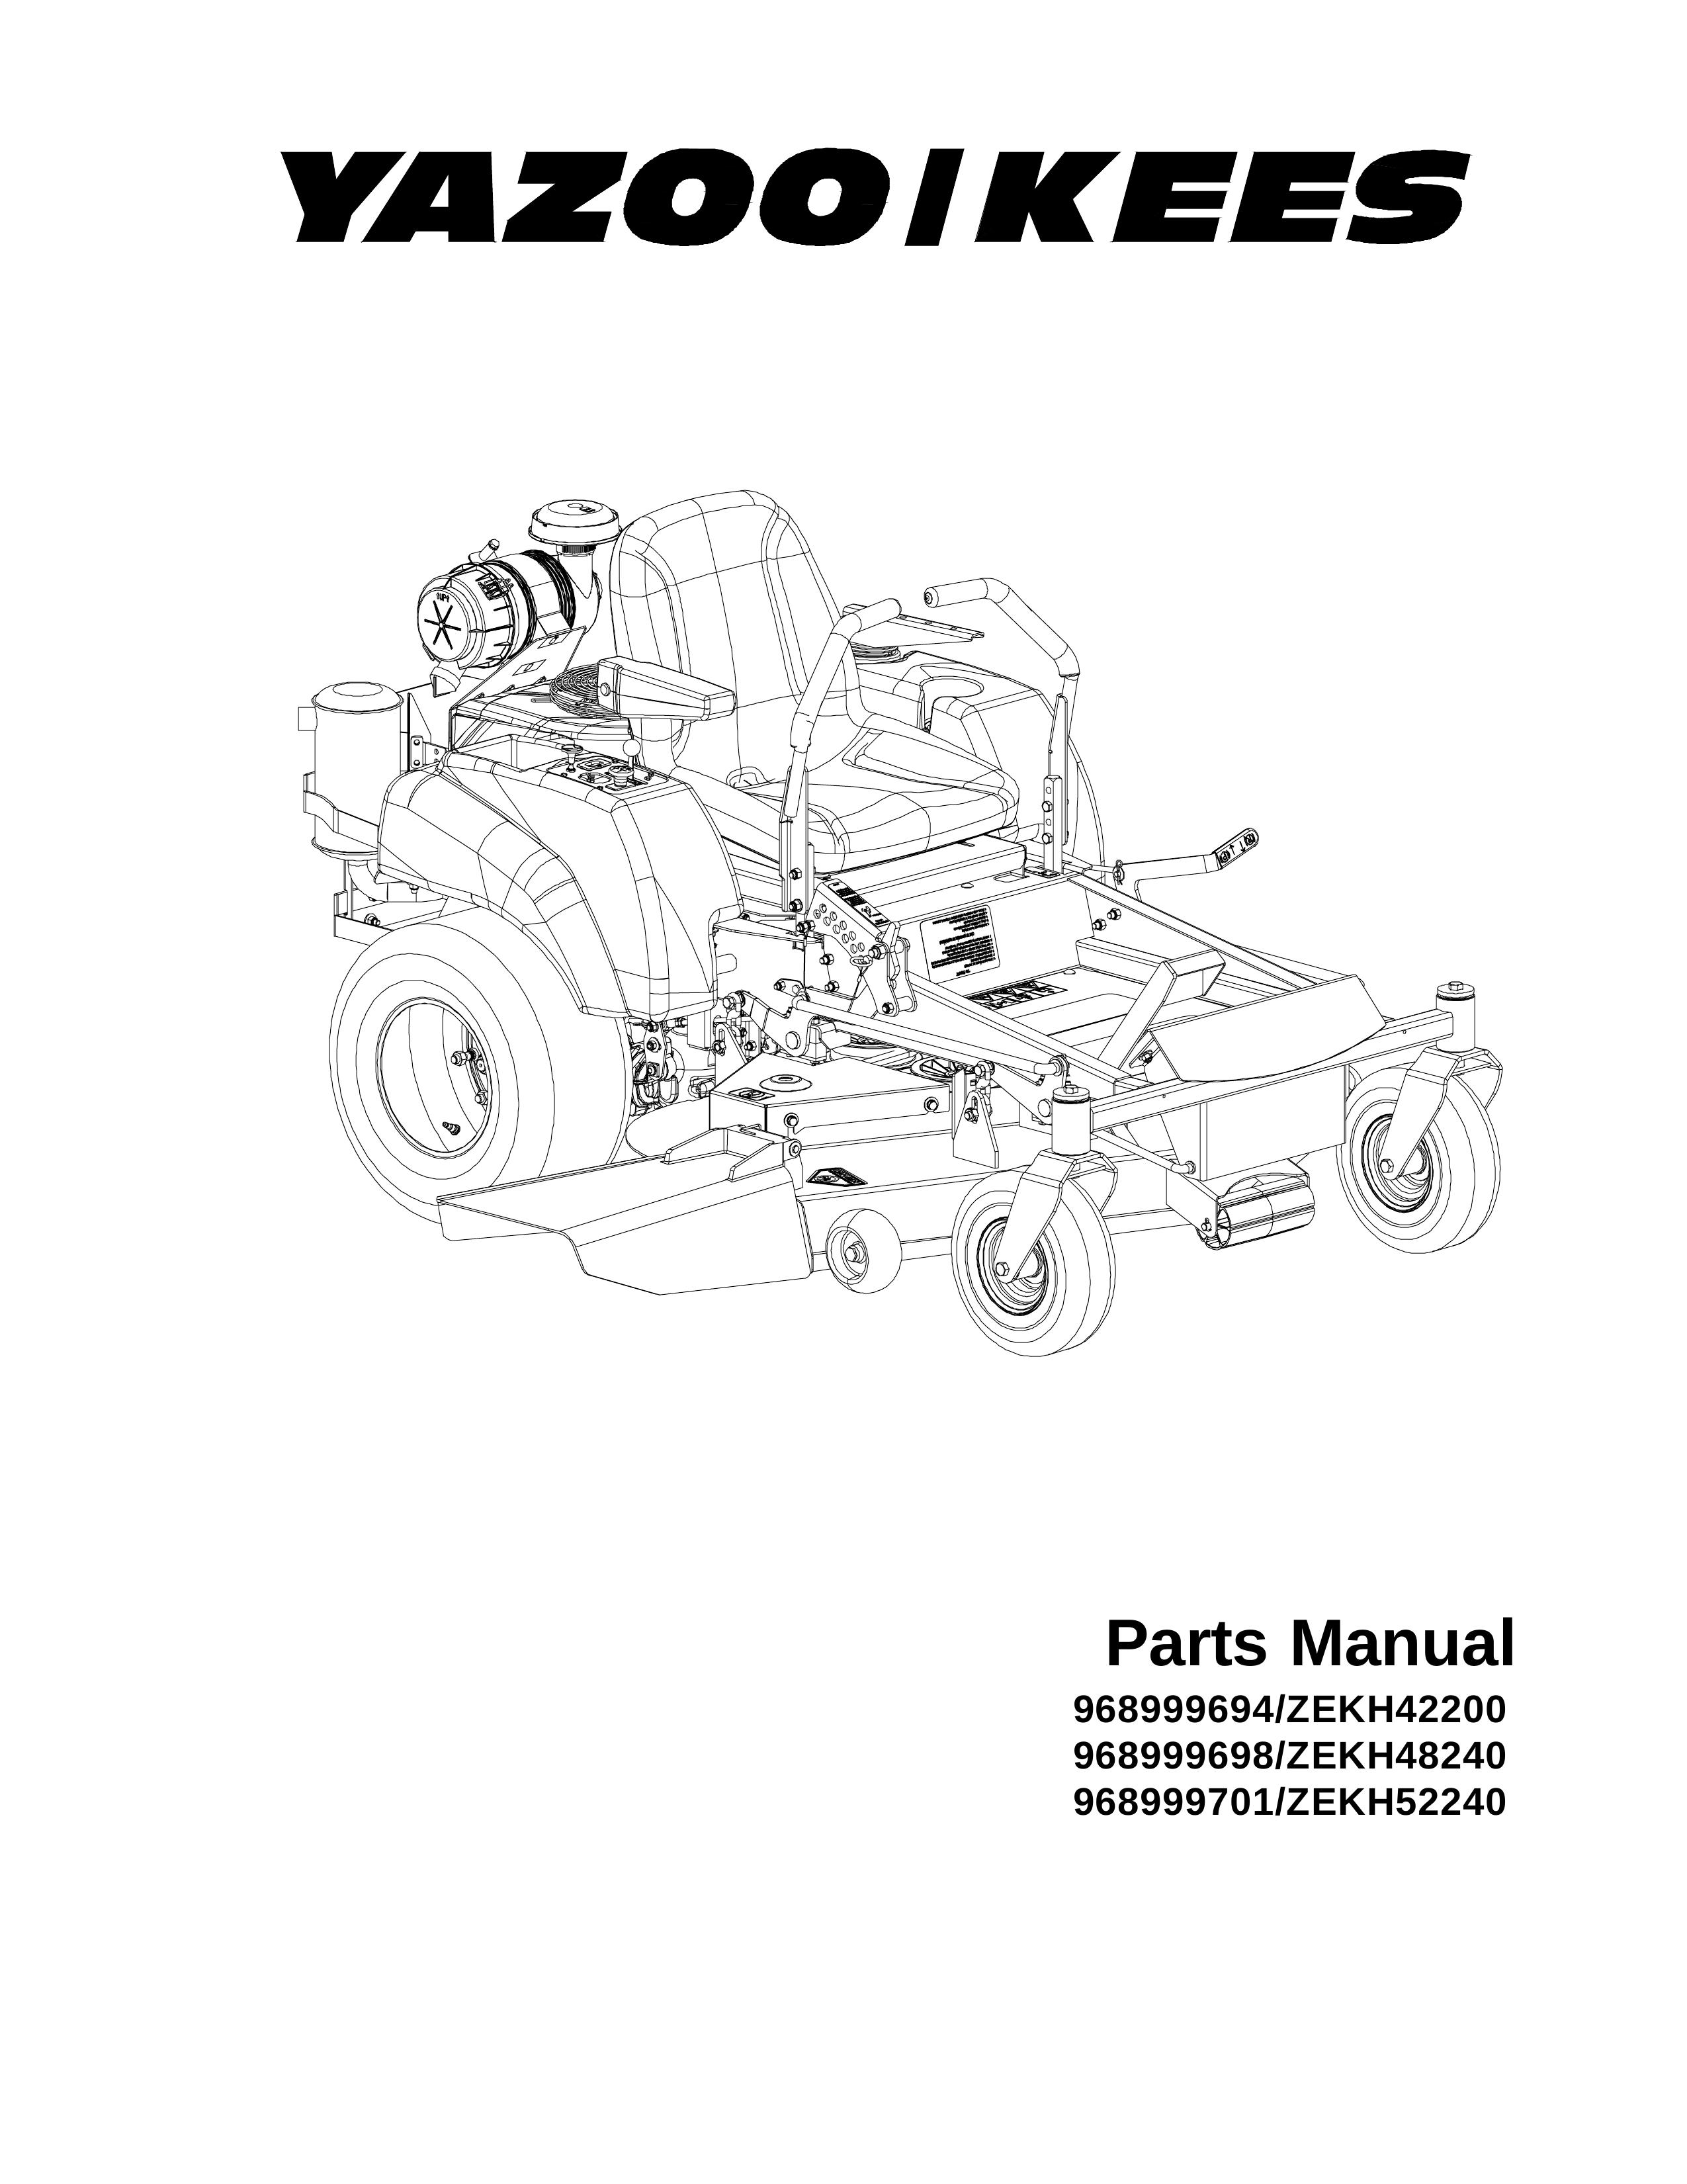 Yazoo/Kees 968999698/ZEKH48240 Lawn Mower User Manual